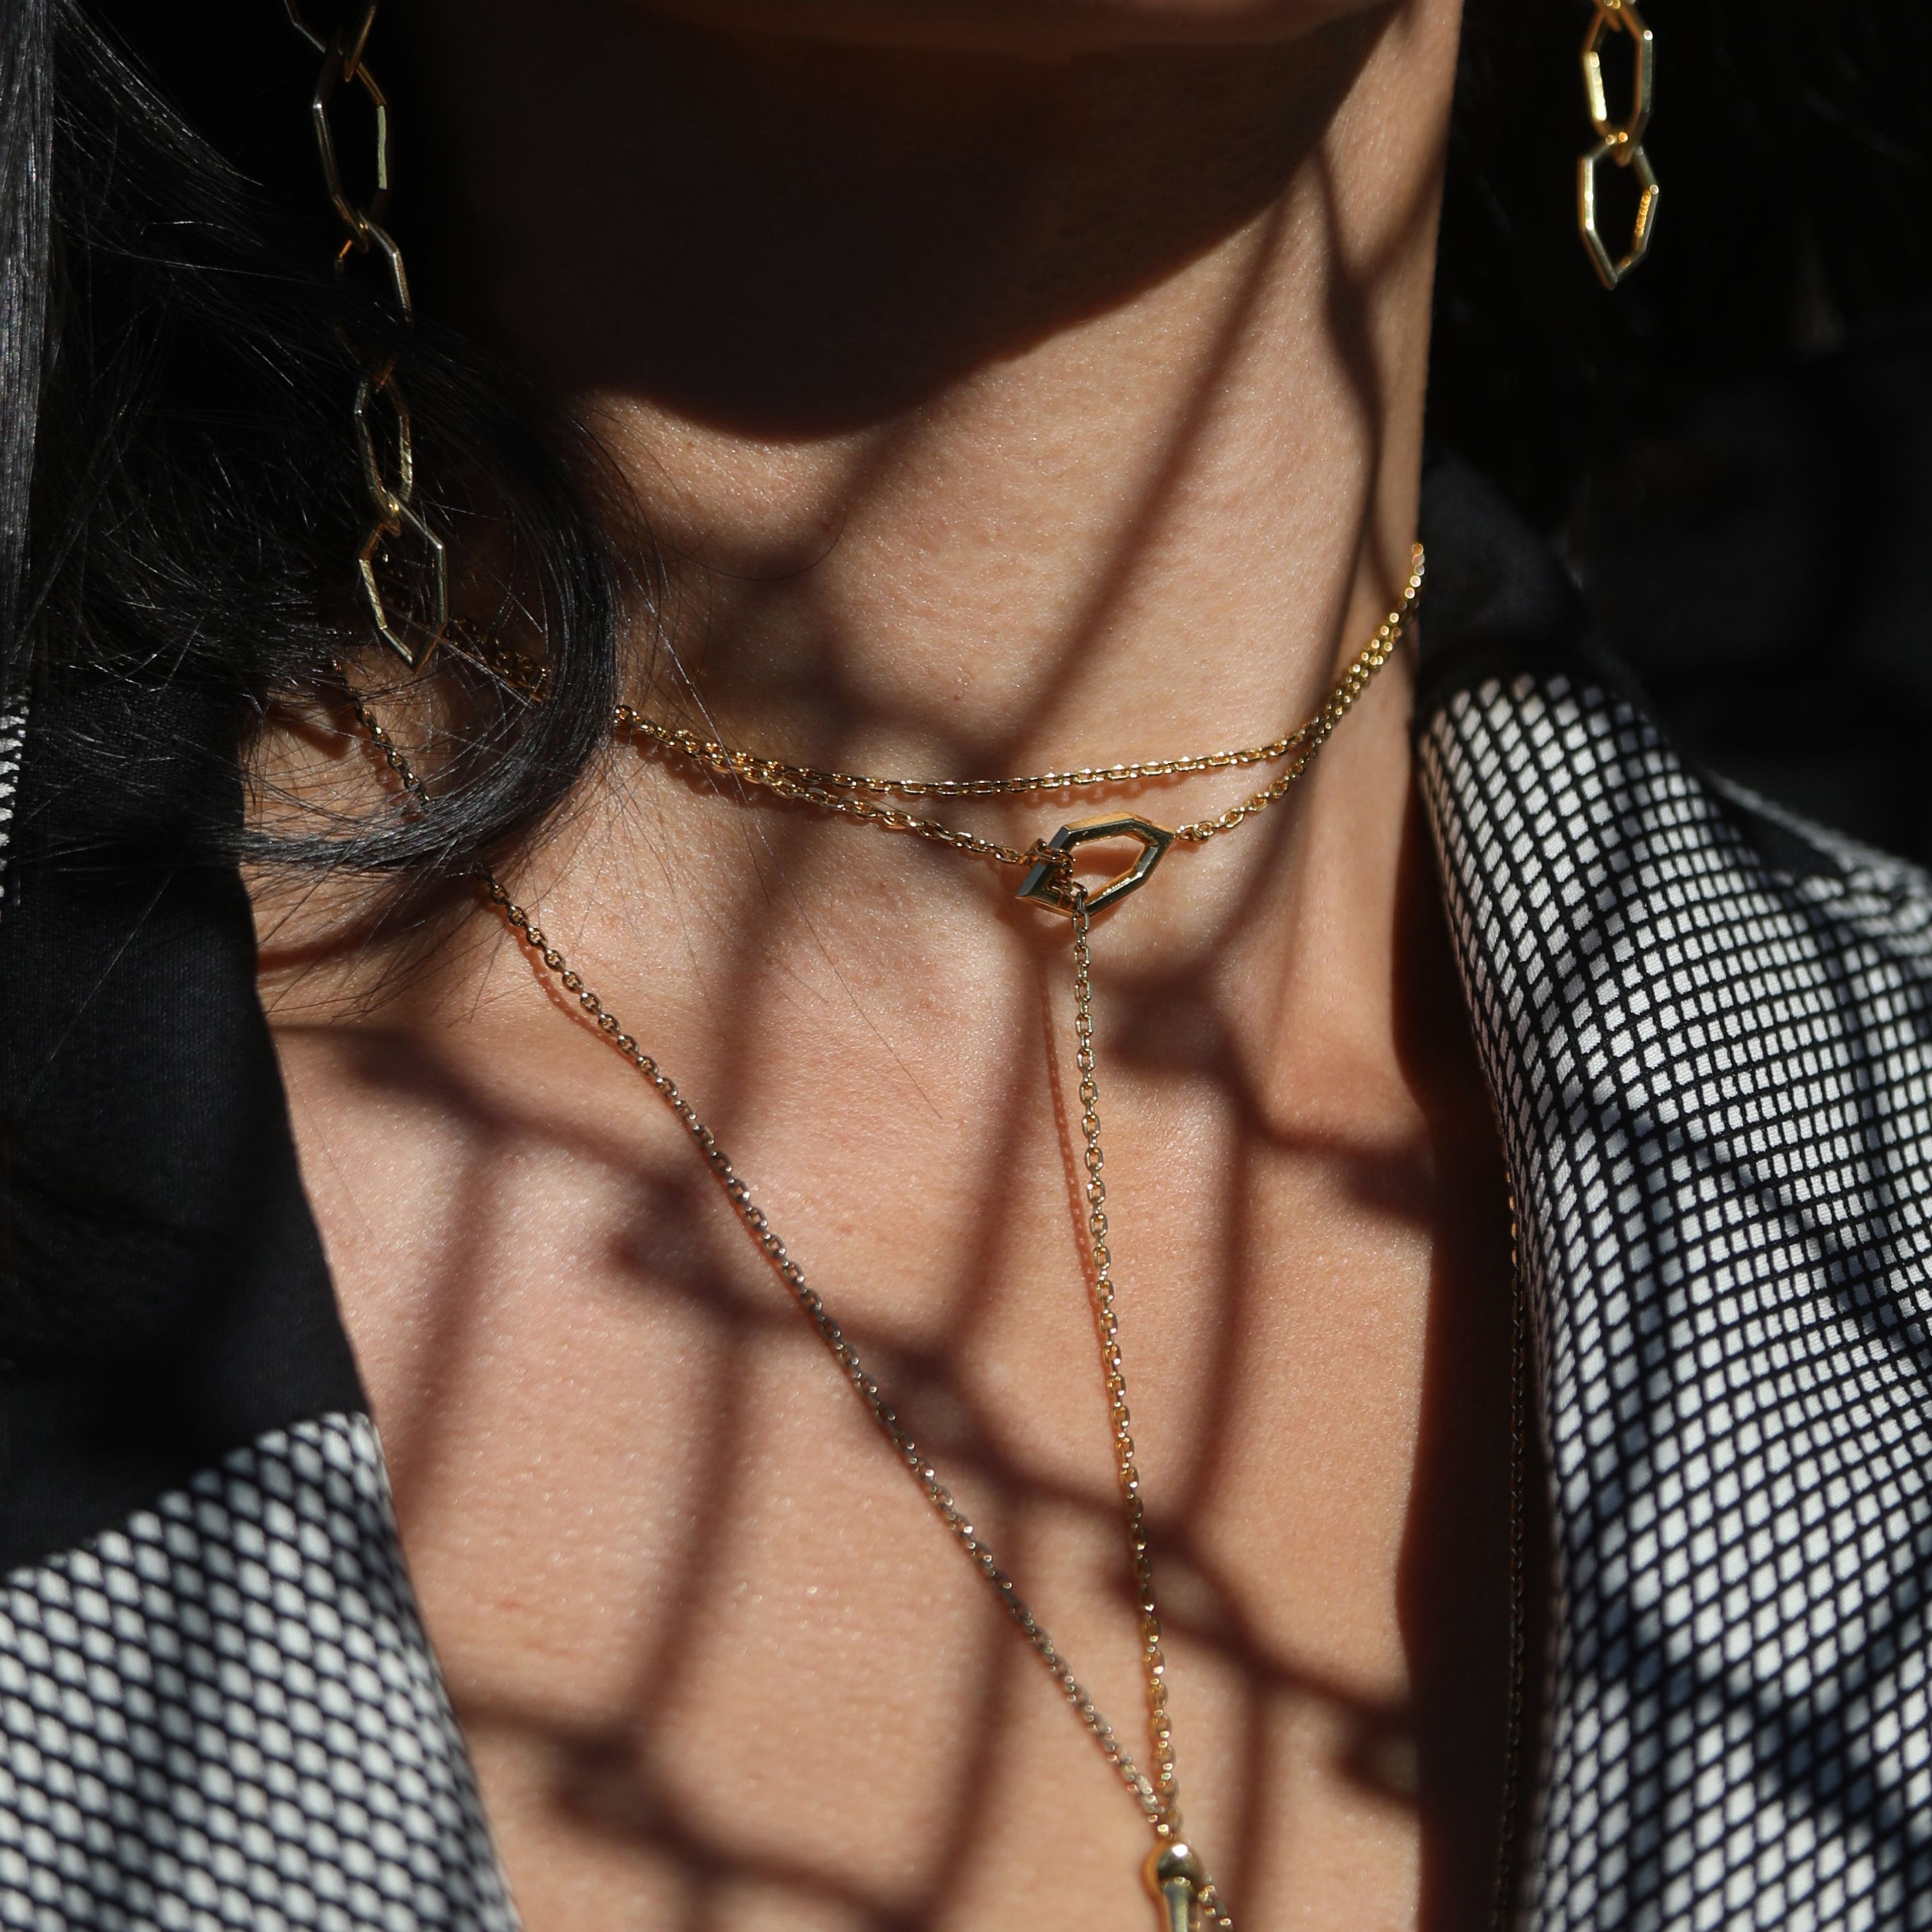 Amanti Chain Link Earrings In 18K Yellow Gold